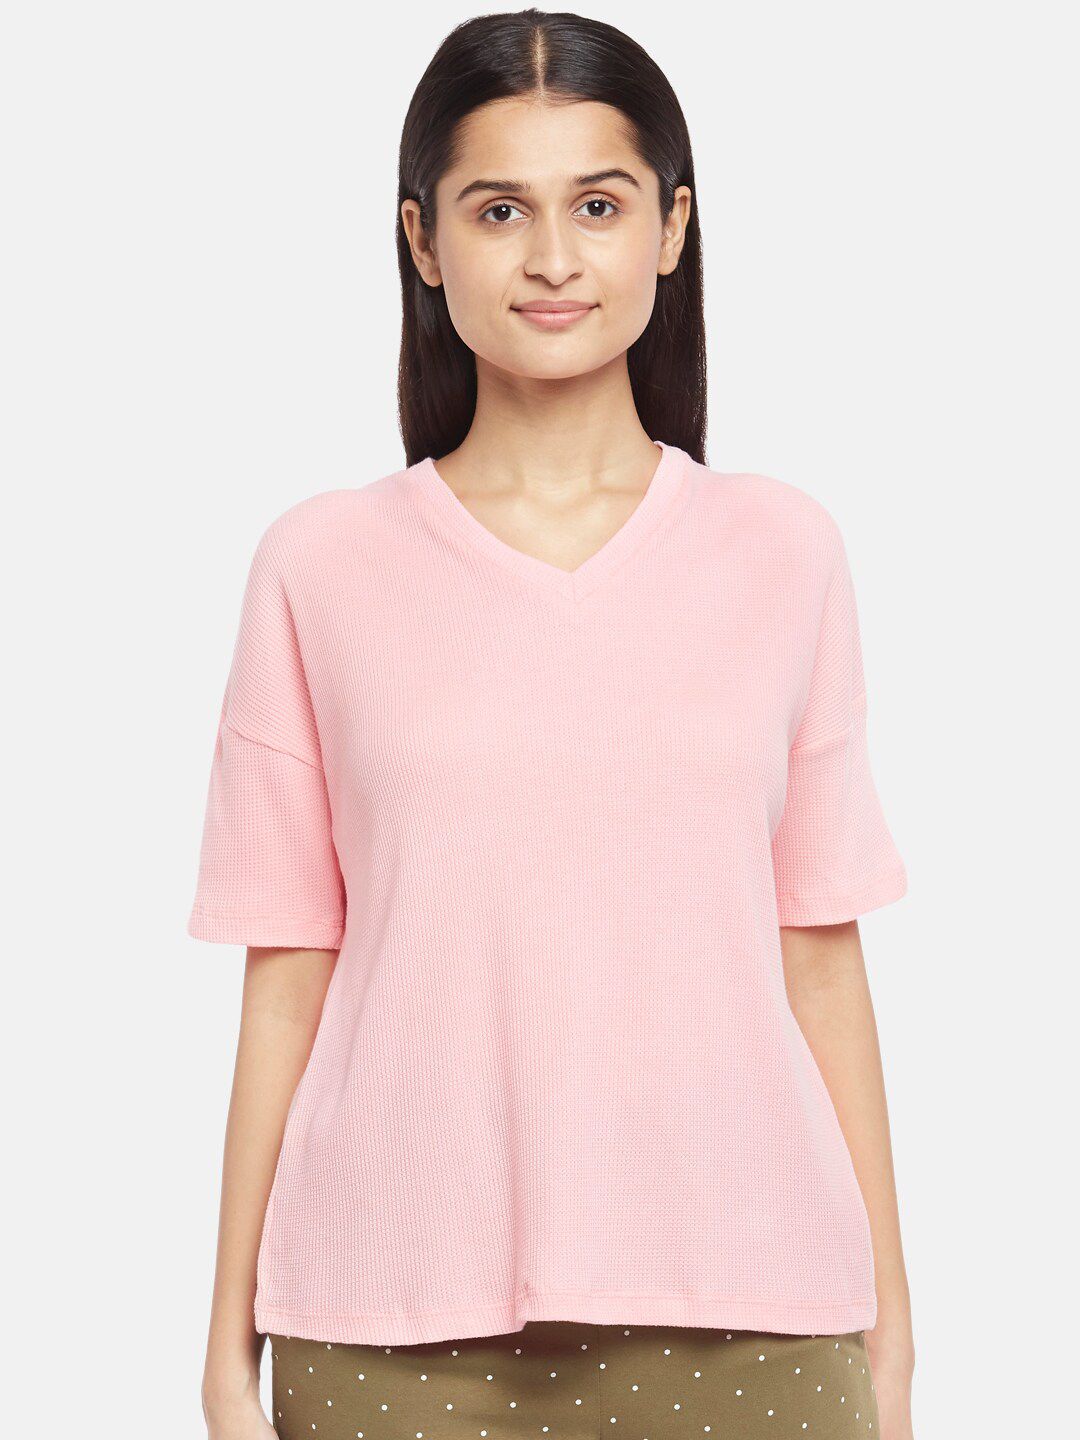 Dreamz by Pantaloons Pink Drop Shoulder Sleeves Regular Lounge tshirt Price in India